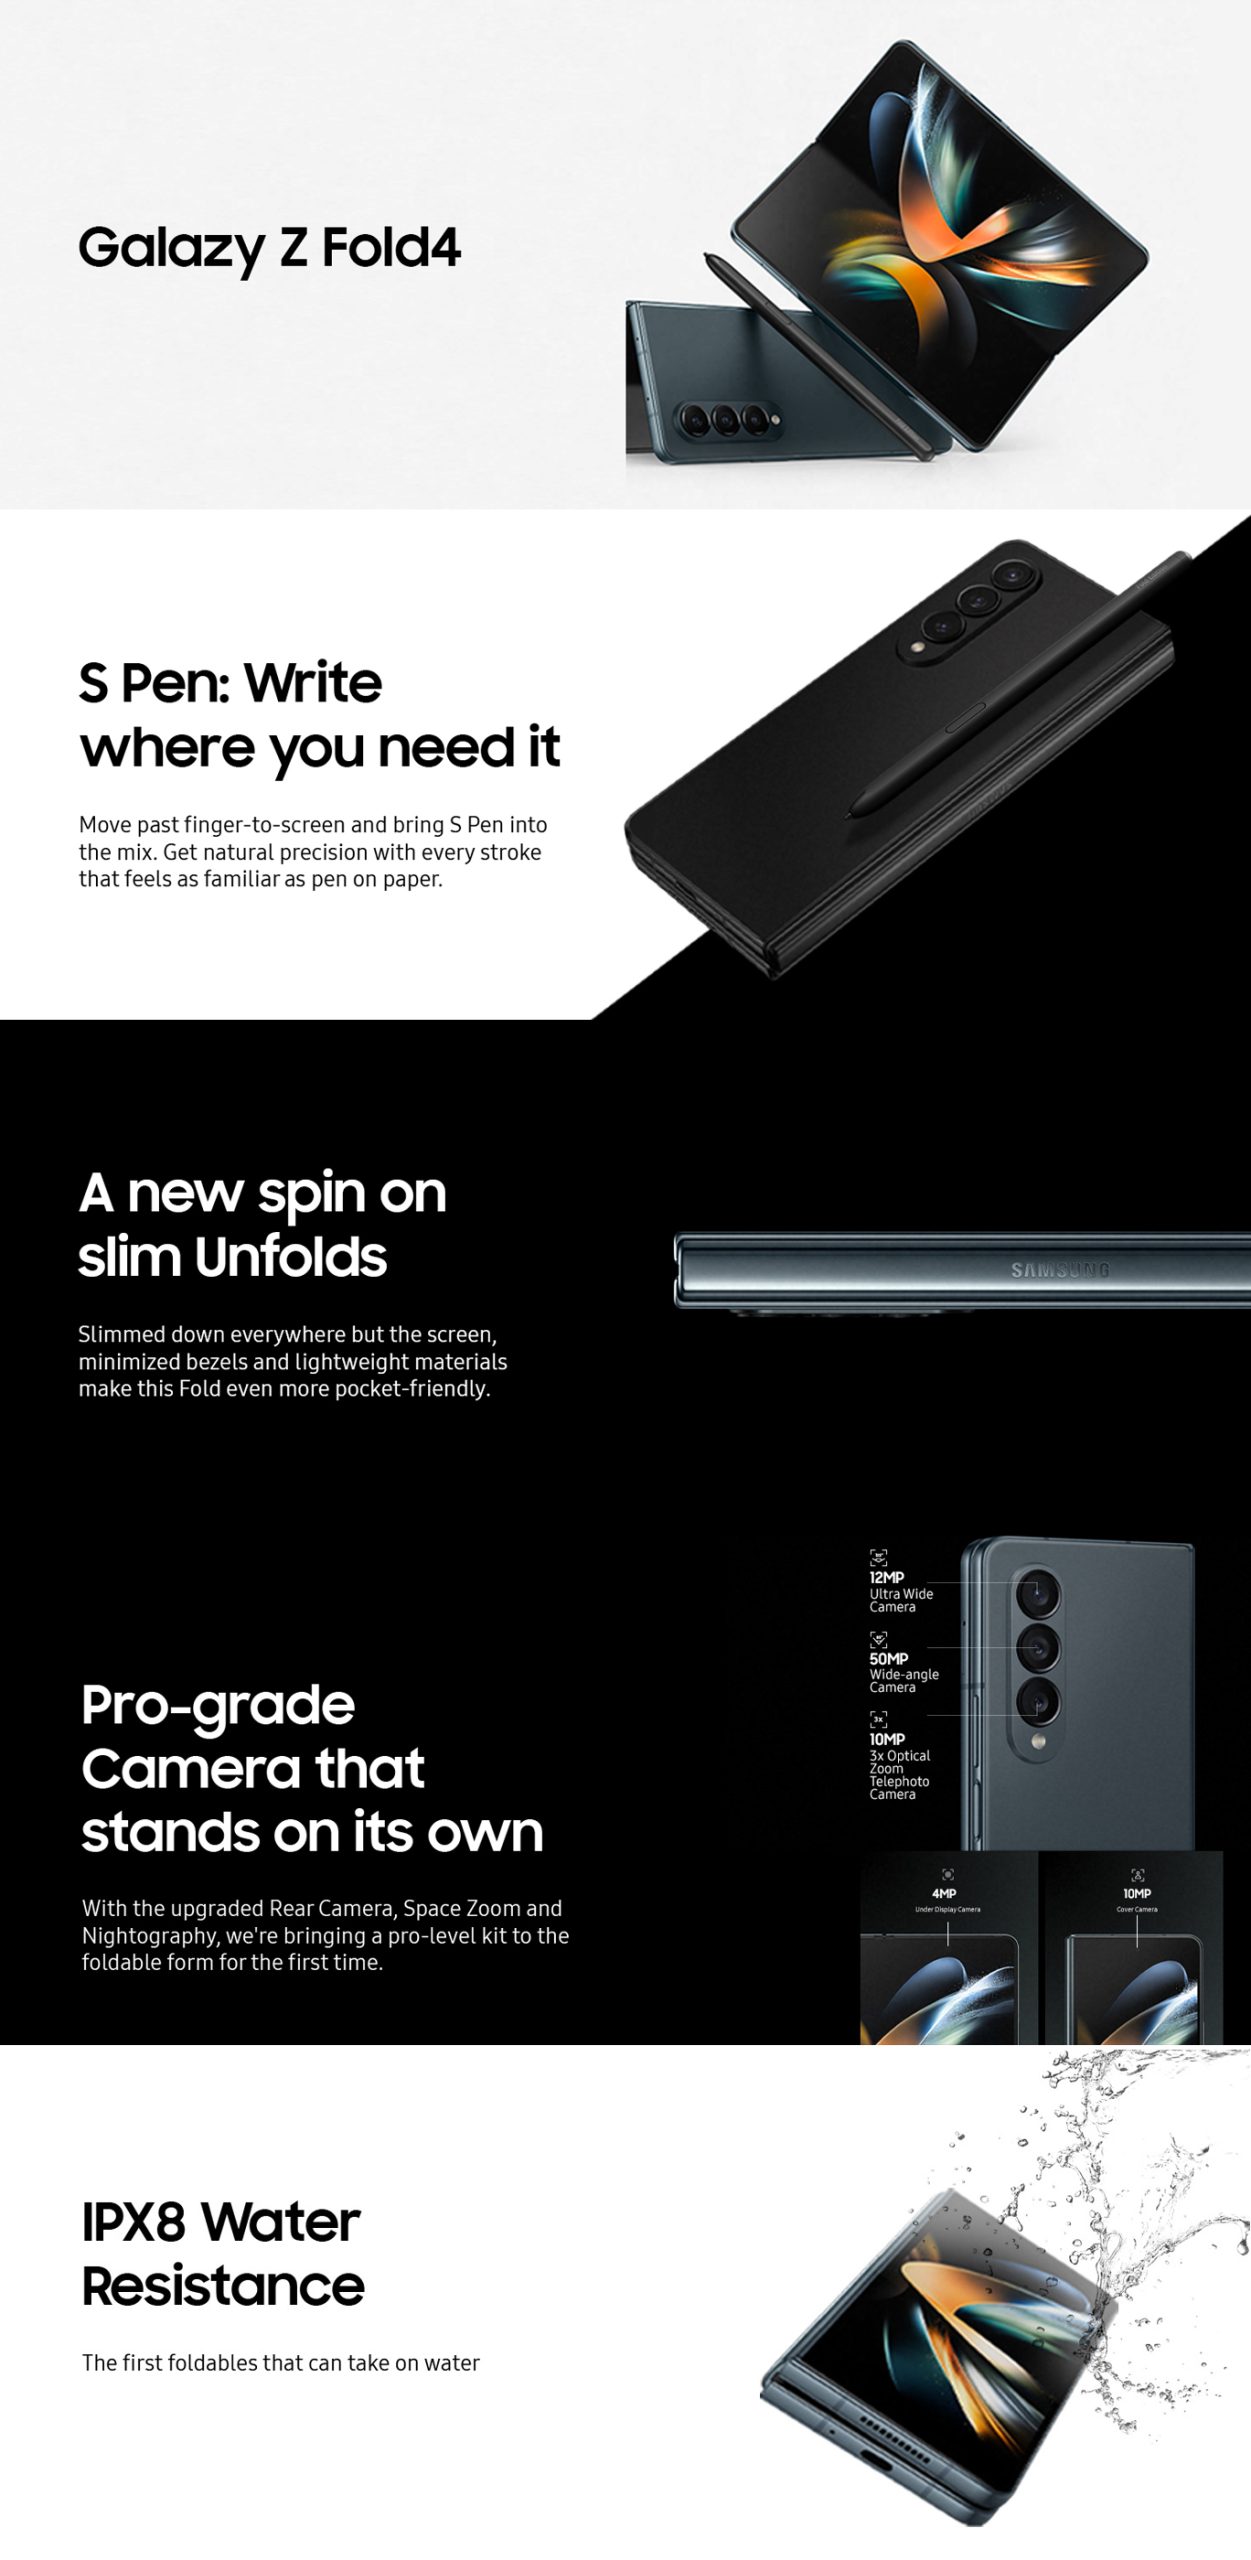 Buy Samsung Galaxy Z Fold4 5G Phantom Black (12GB RAM, 256GB Storage) Product Description